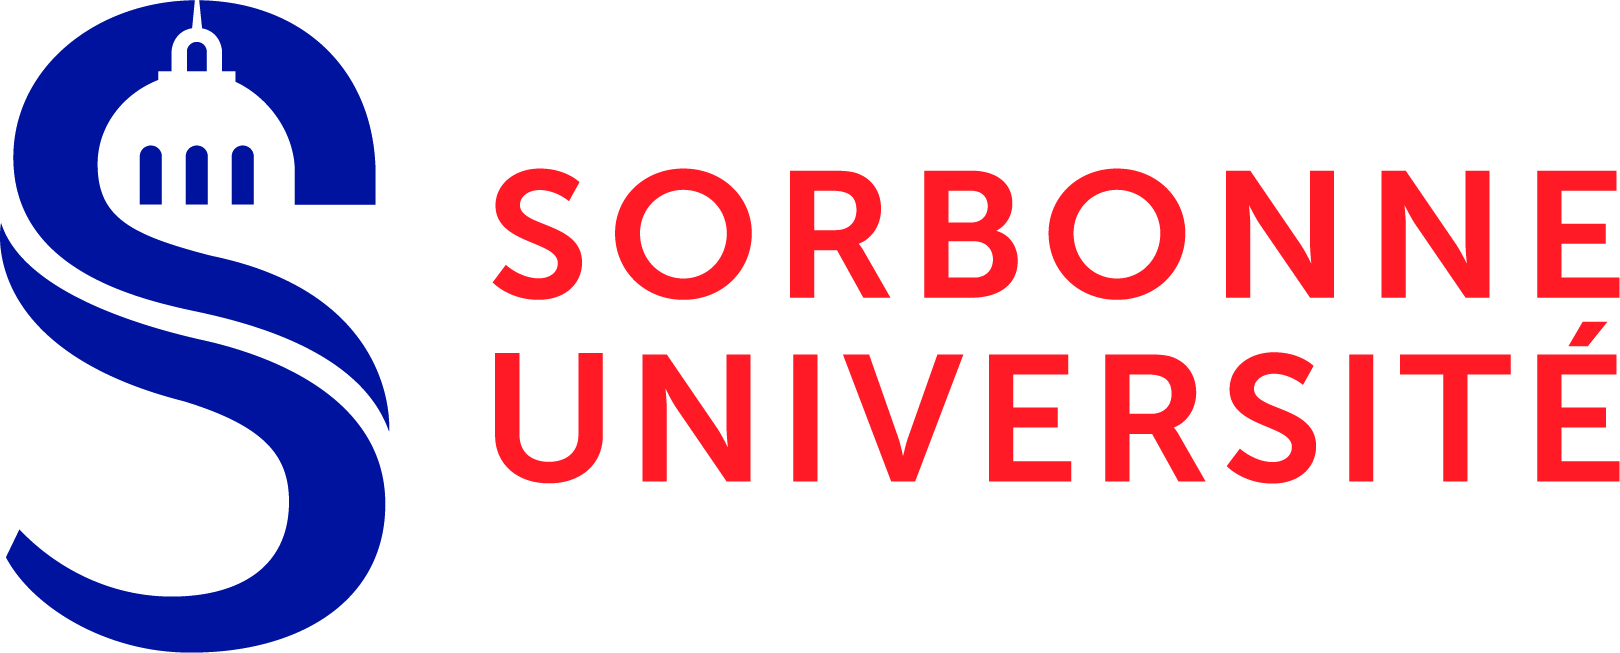 Sorbonnes Logo